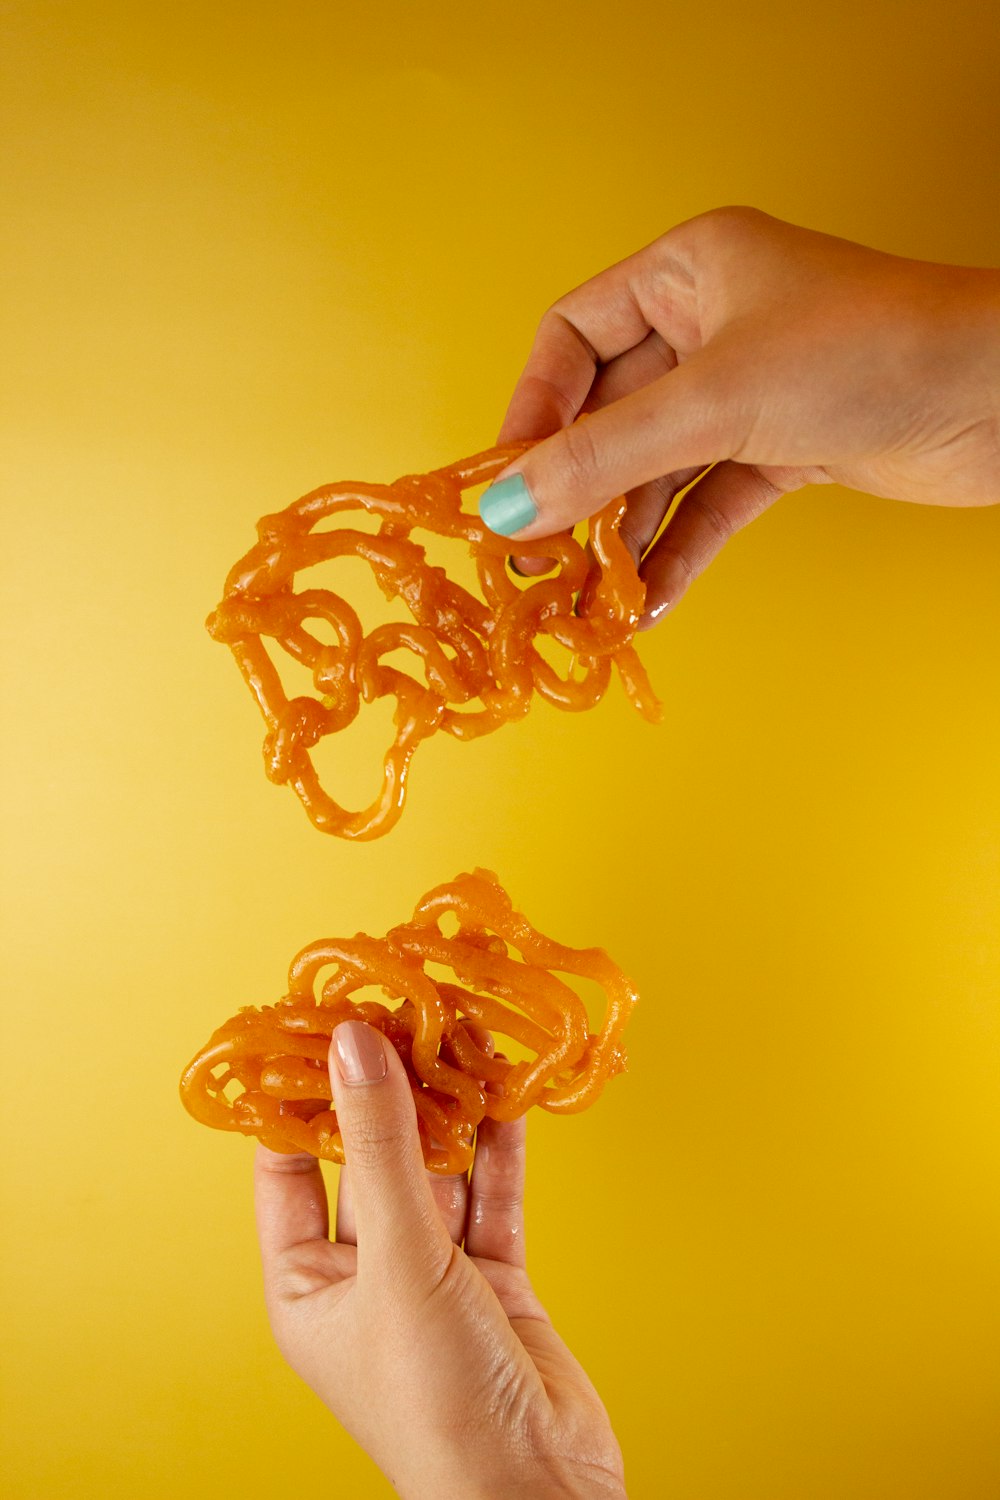 person holding orange plastic toy